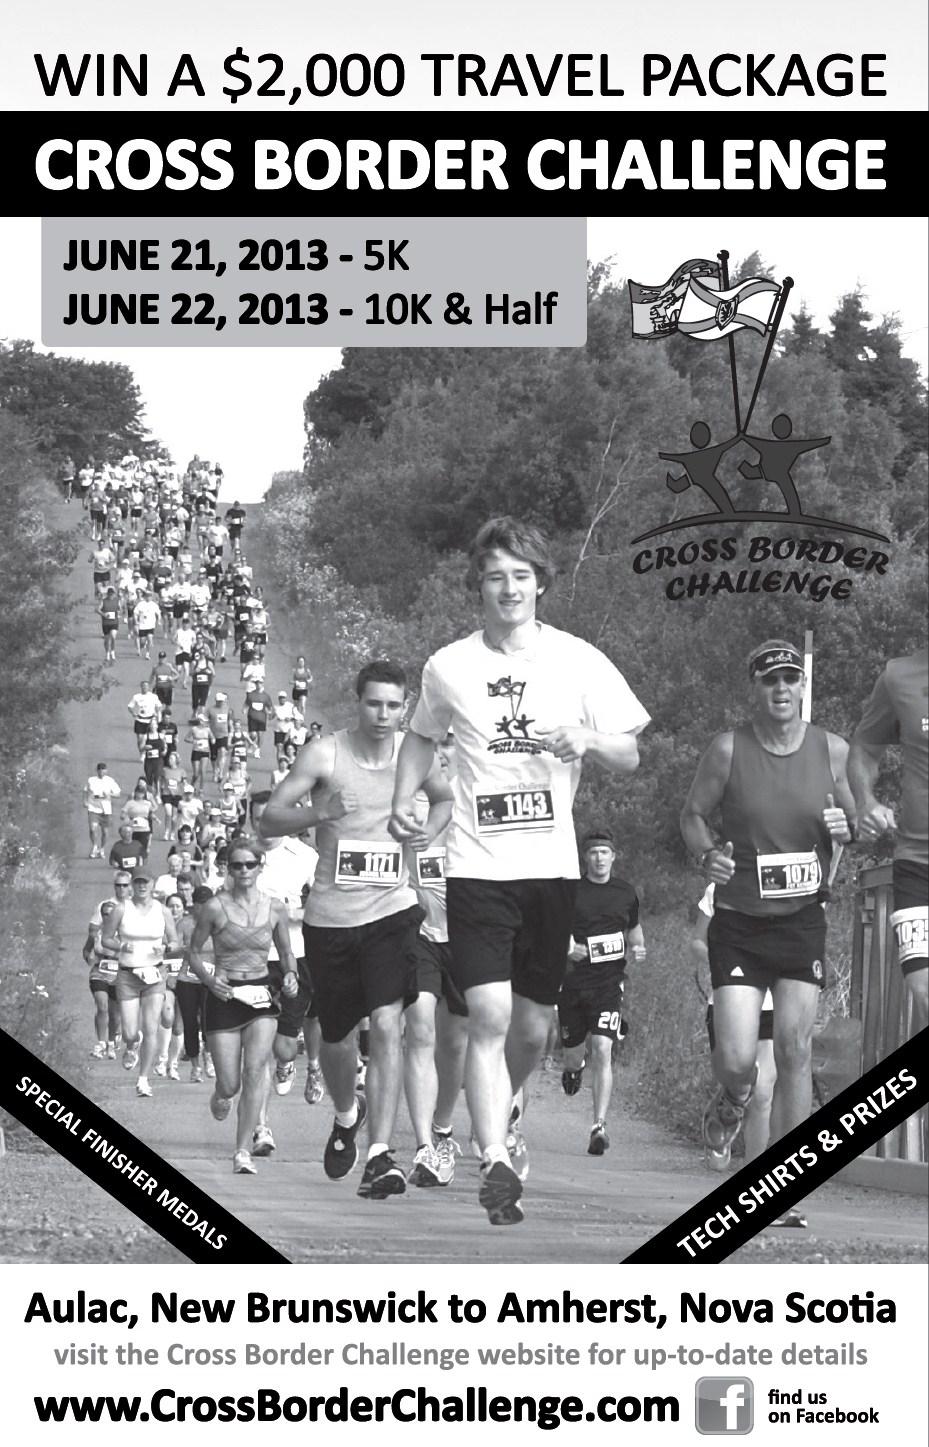 June 29, 2013 Fulton Campbell Memorial Run and Laura Lee Walsh 5K Half Marathon and 5K 8:00 am at Total Assets, Pooles Corner $10 for 5K, $20 for Half Marathon, free for kids under 16 Half- Marathon